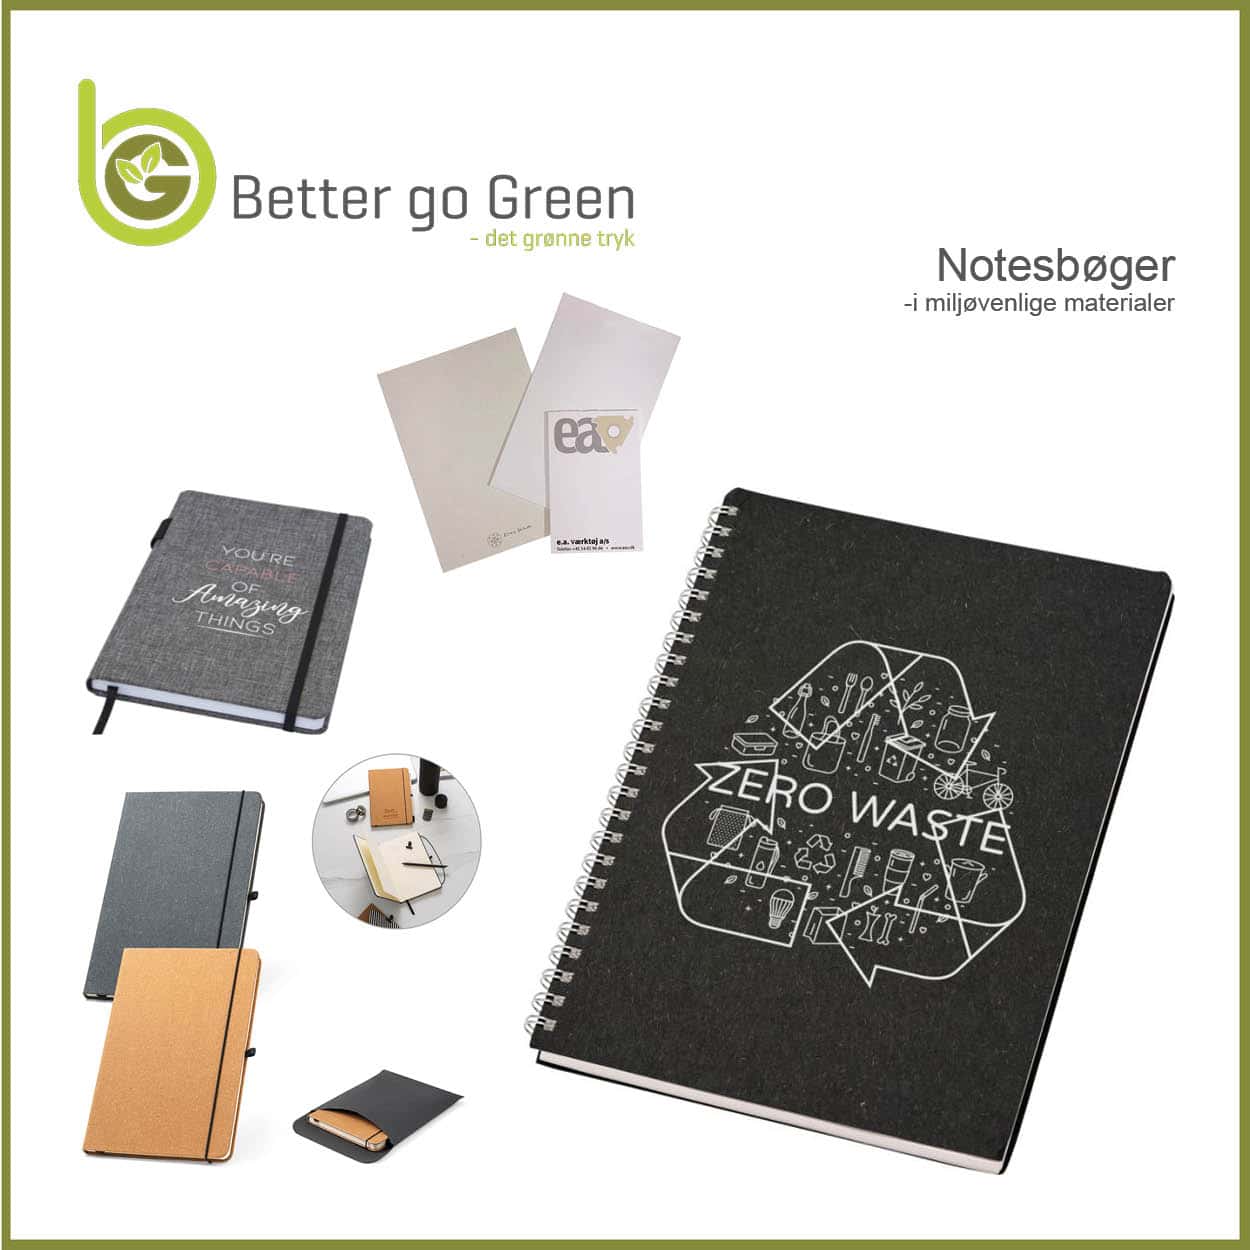 Notesbøger i miljøvenlige materialer. BetterGoGreen.dk